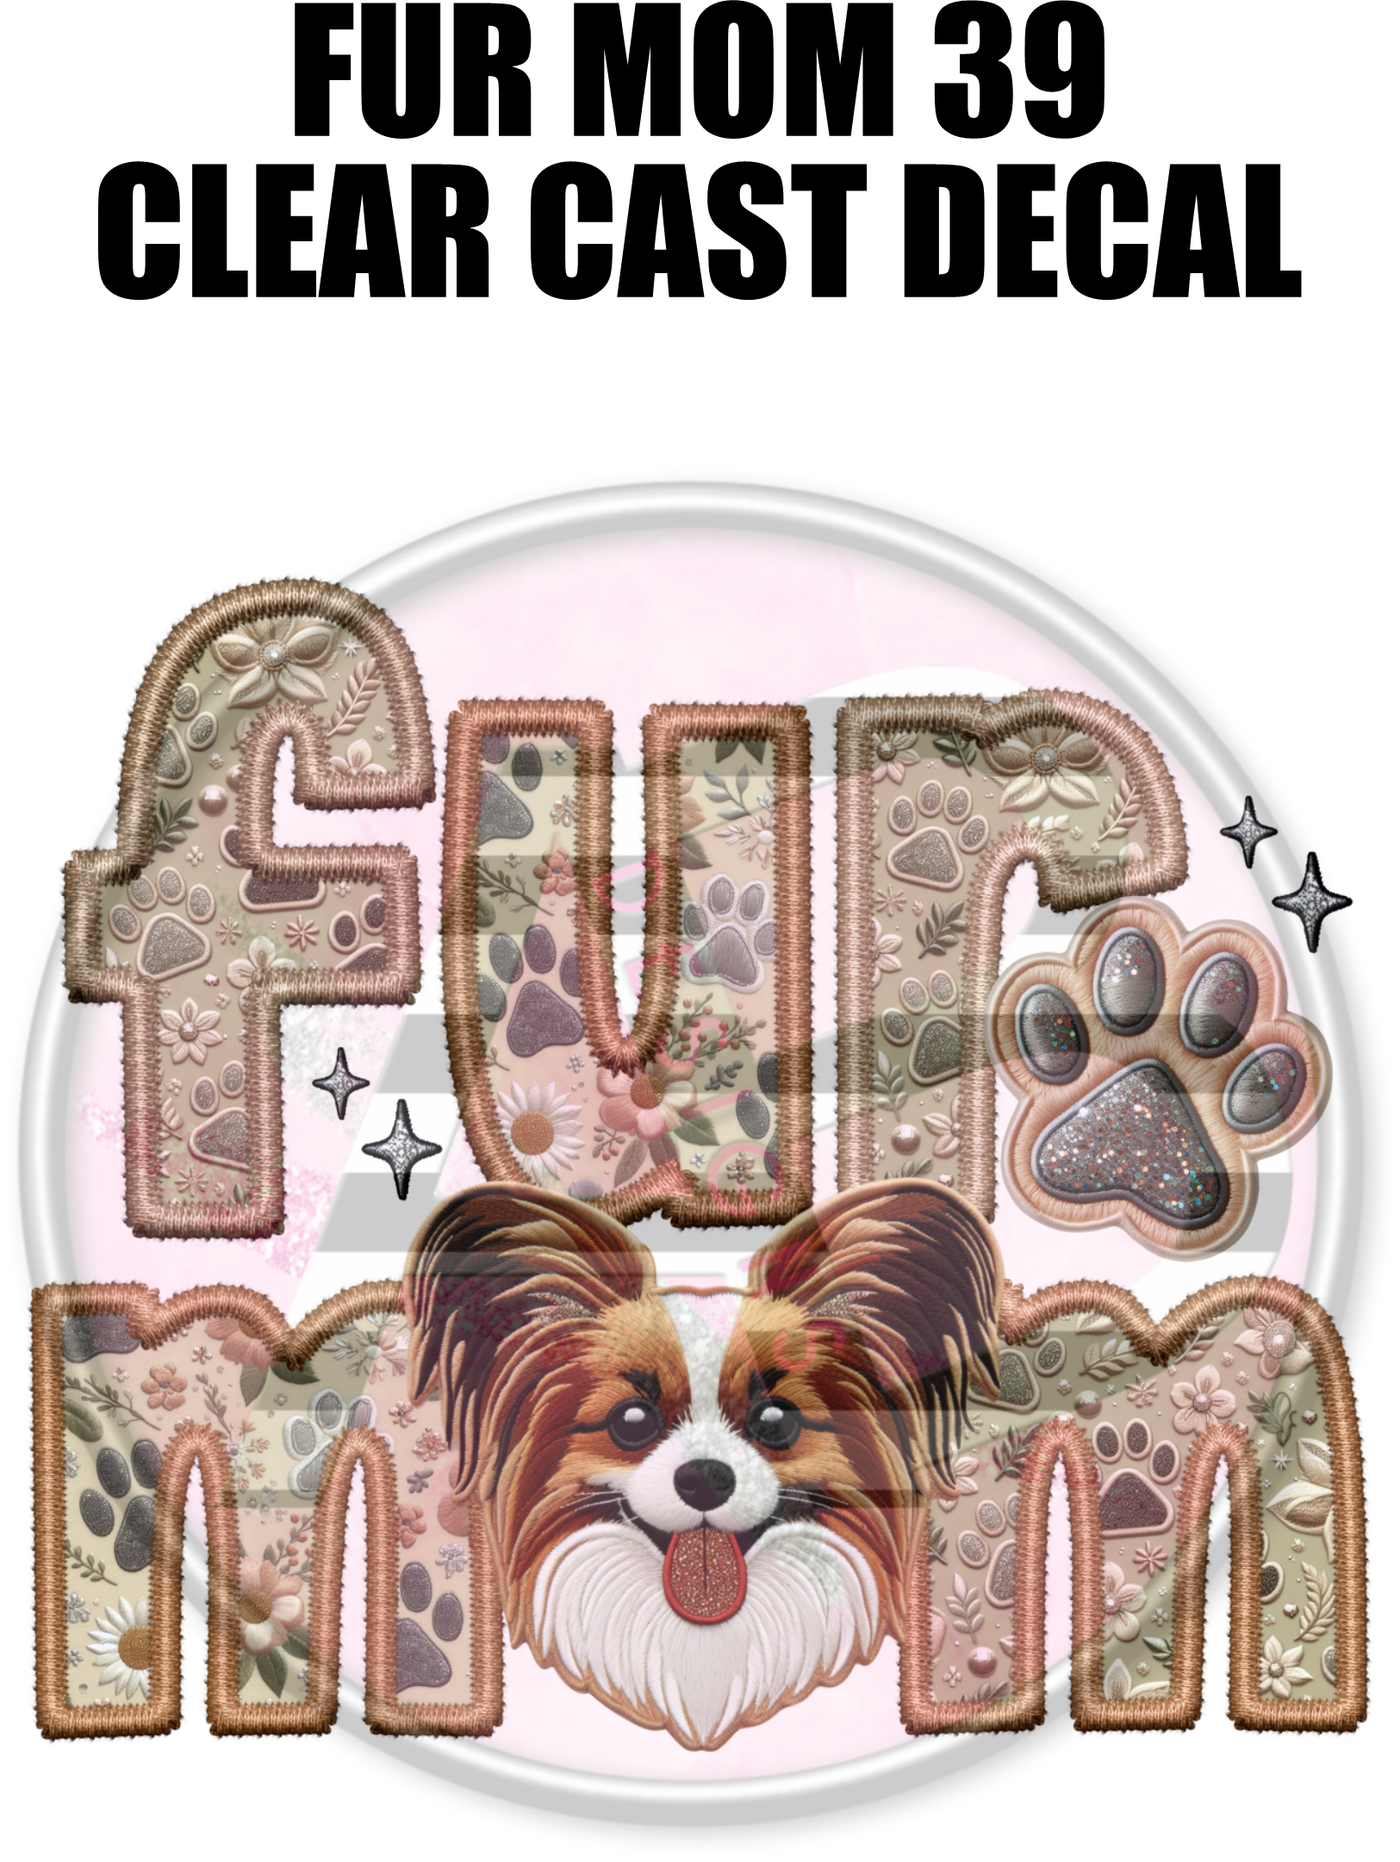 Fur Mom 39 - Clear Cast Decal